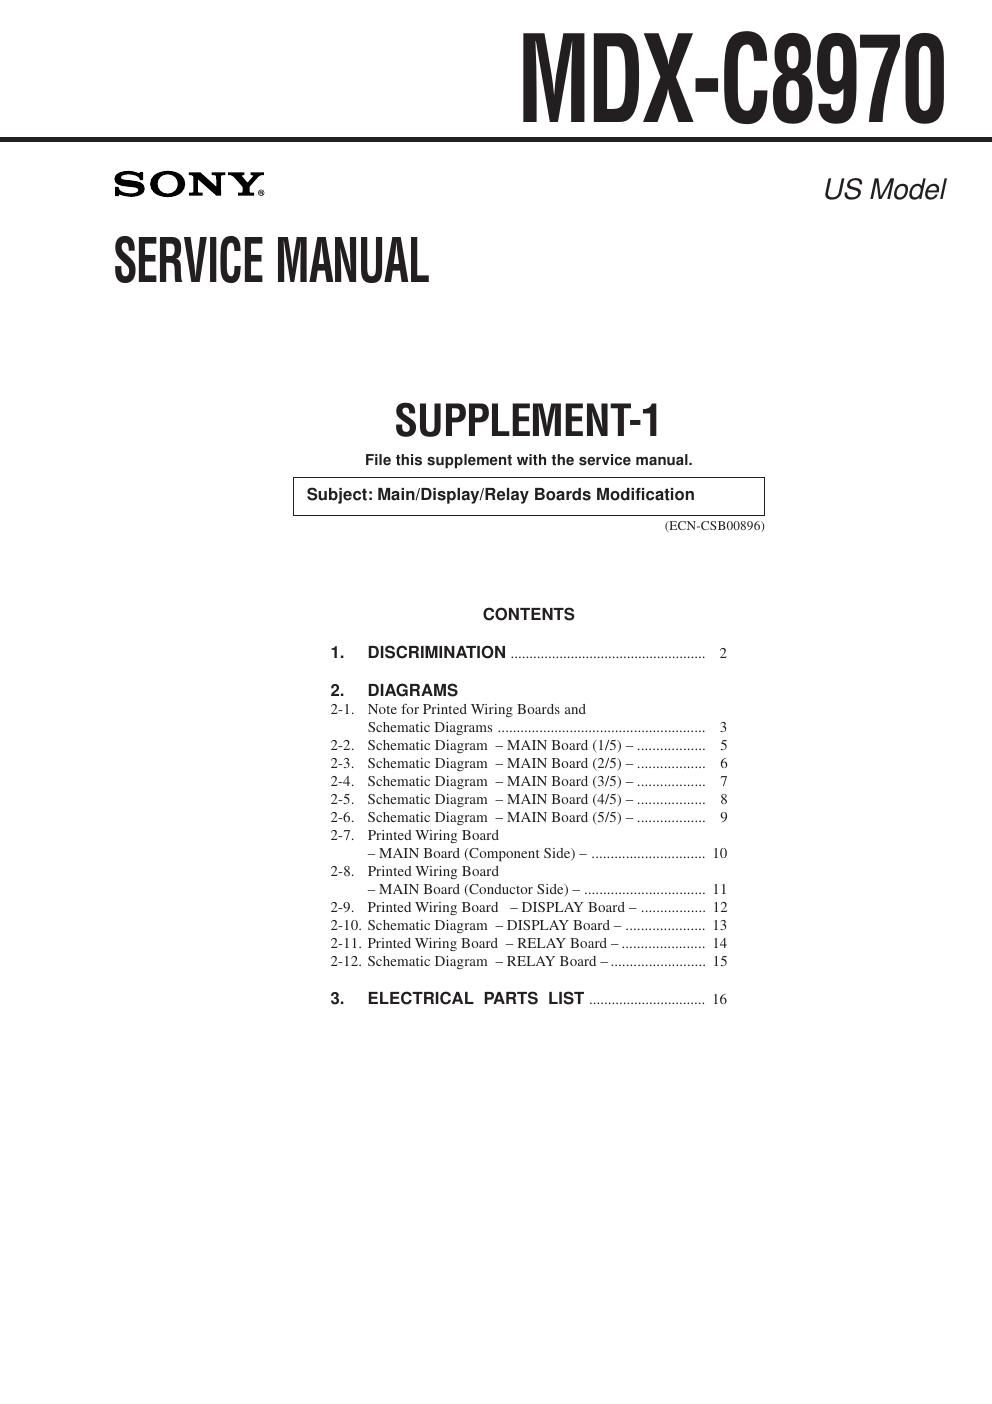 sony mdx c 8970 service manual